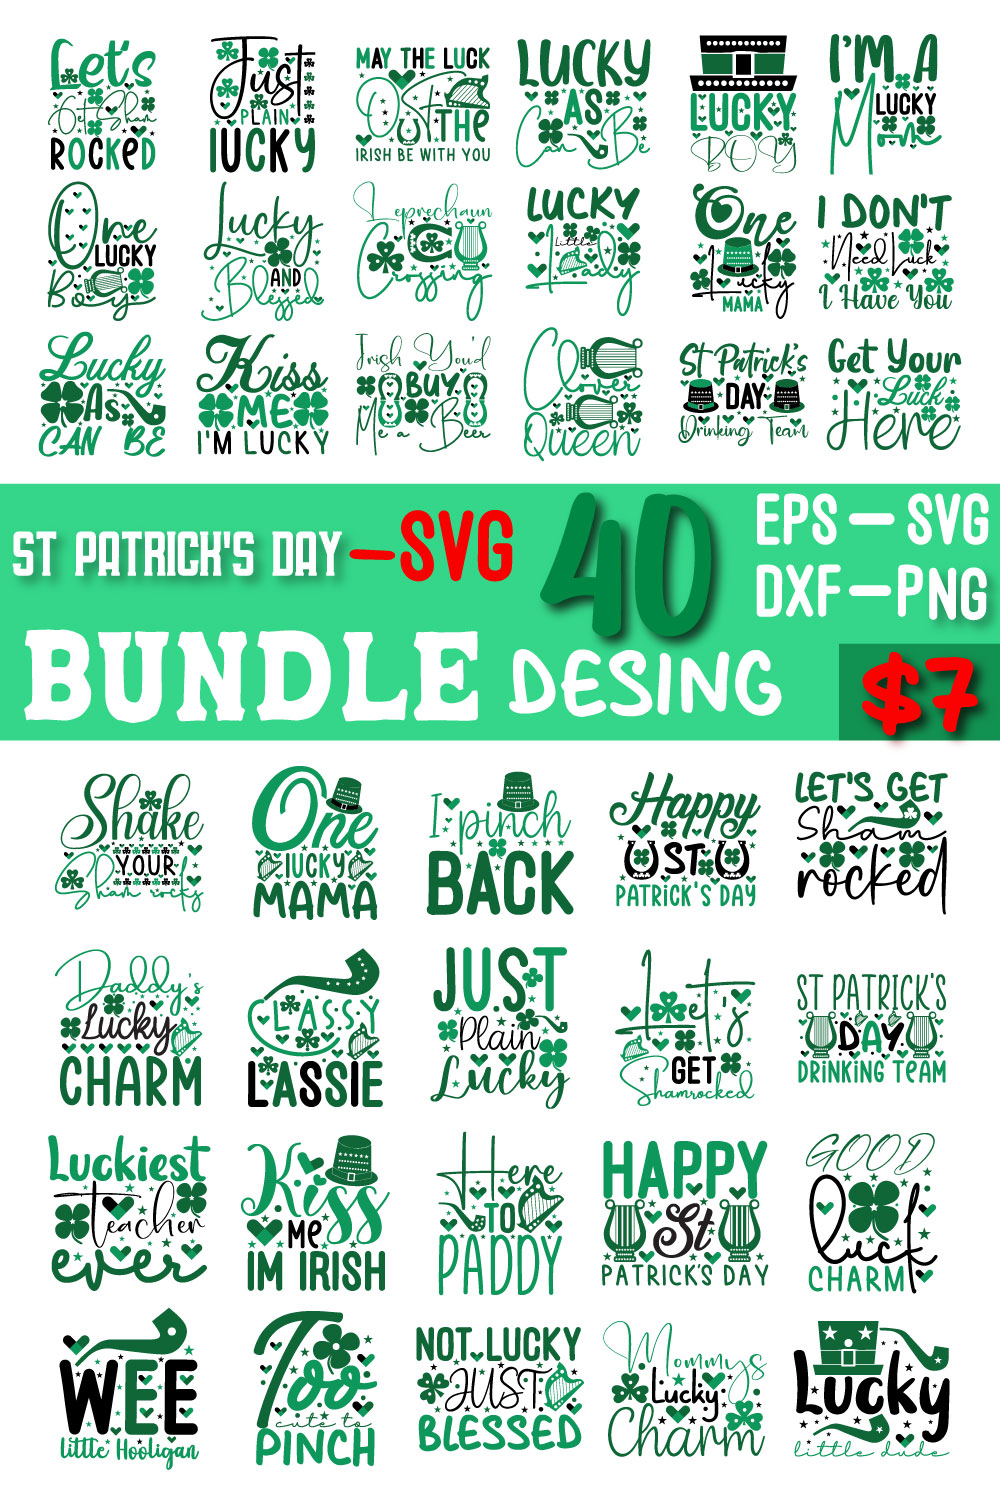 St Patrick's Day SVG Bundle pinterest preview image.